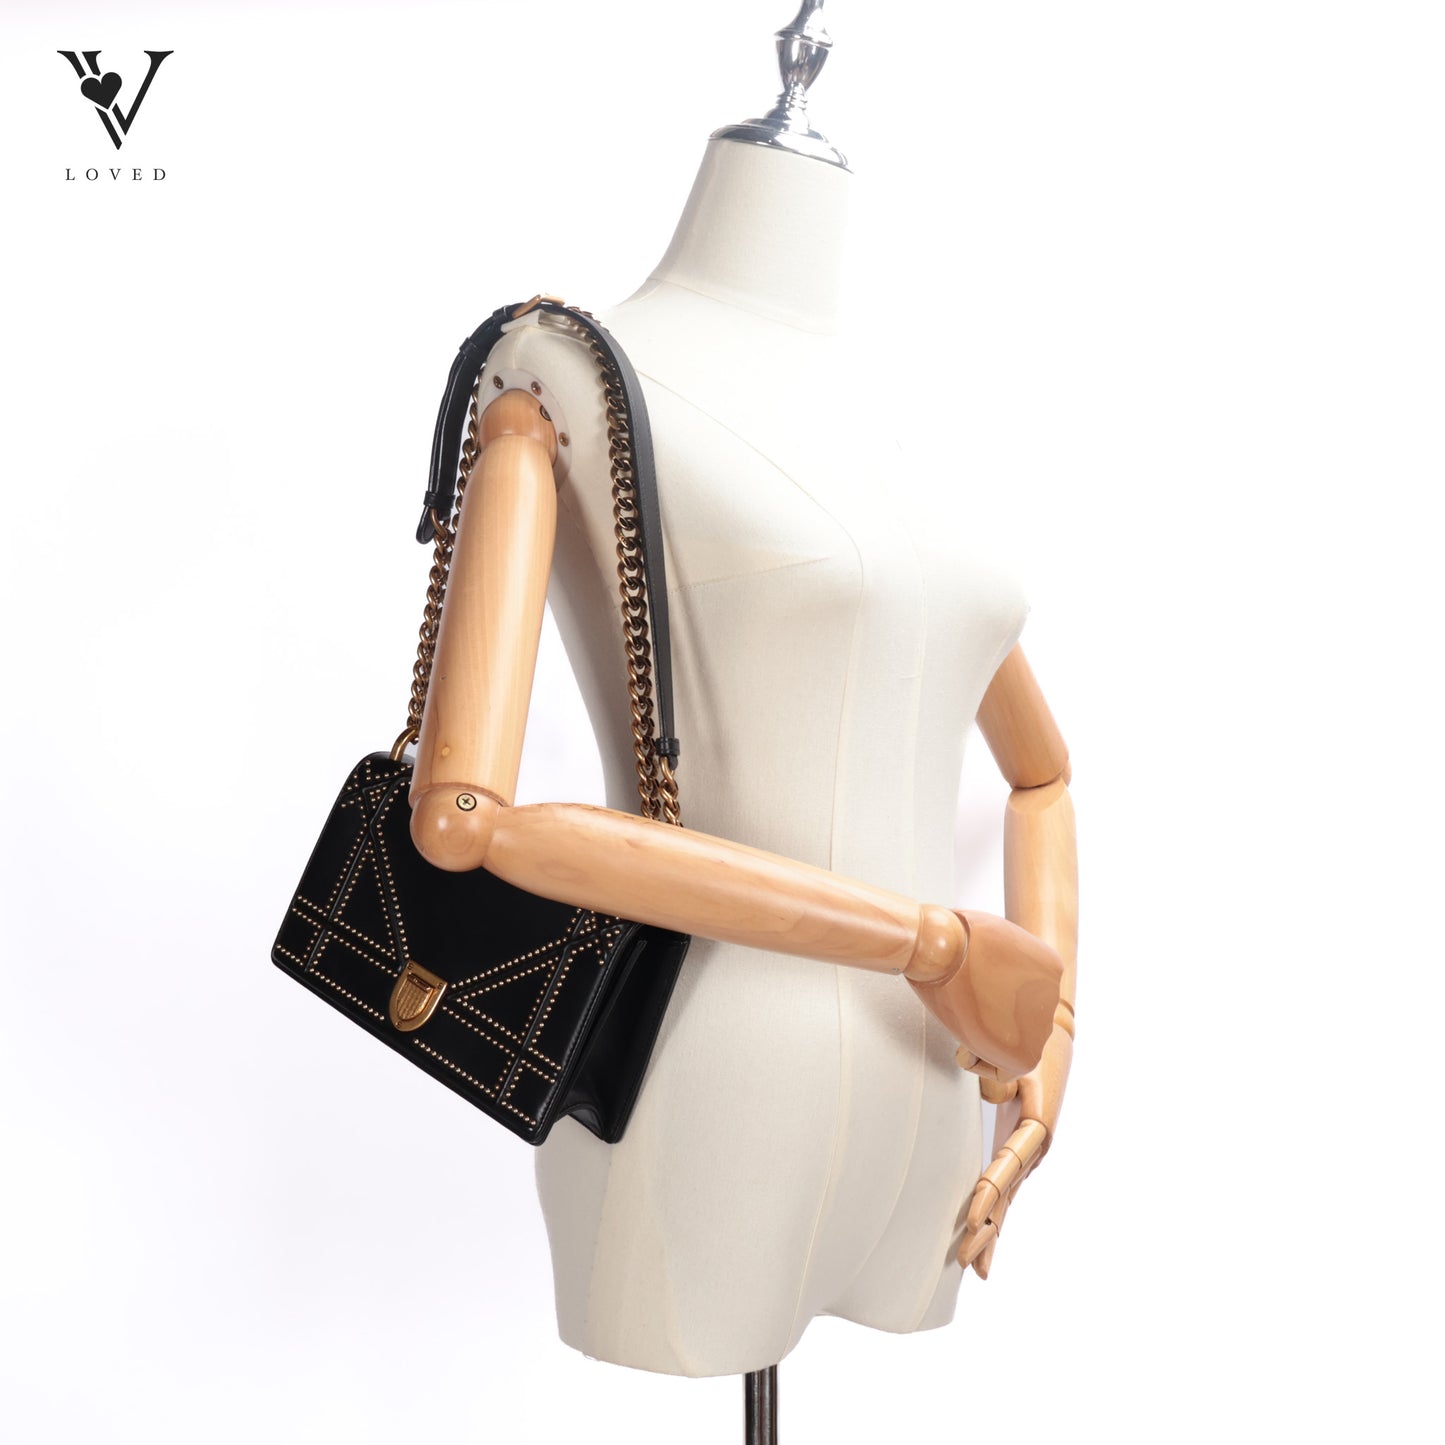 Studded Medium Diorama Flap Bag in Black Lambskin Leather